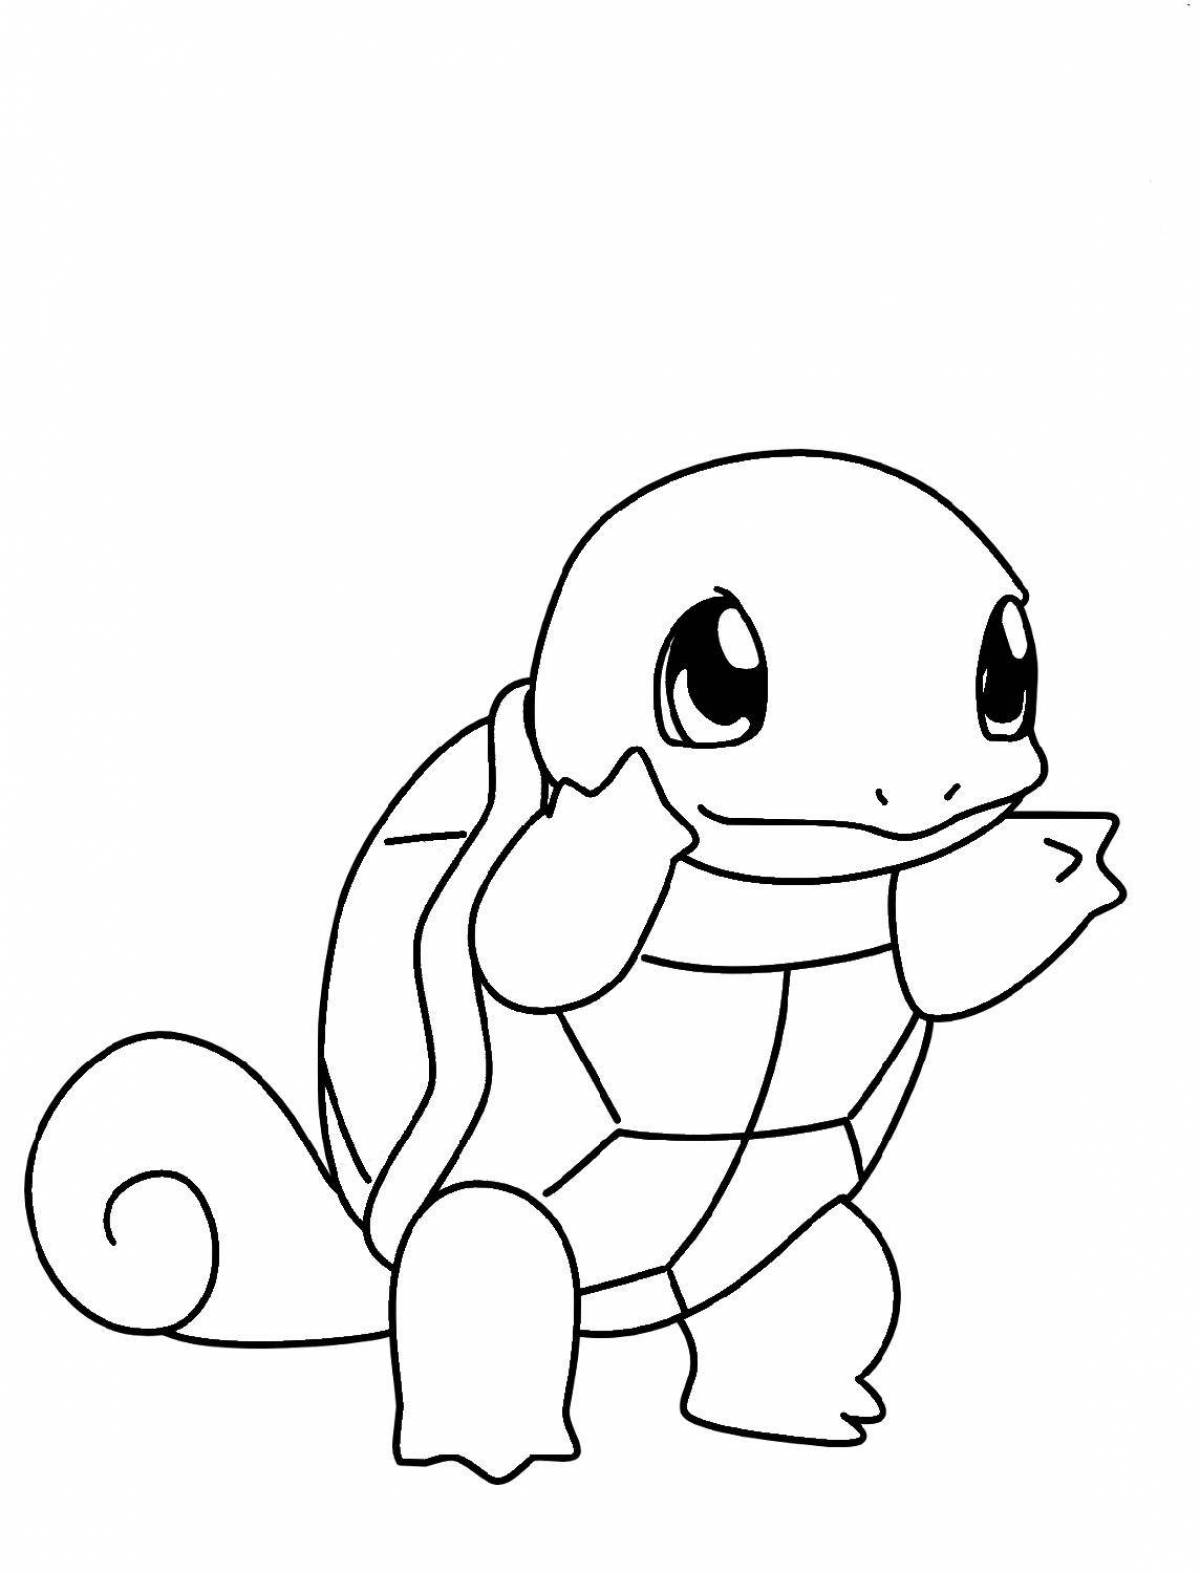 Coloring page joyful squirtle pokemon